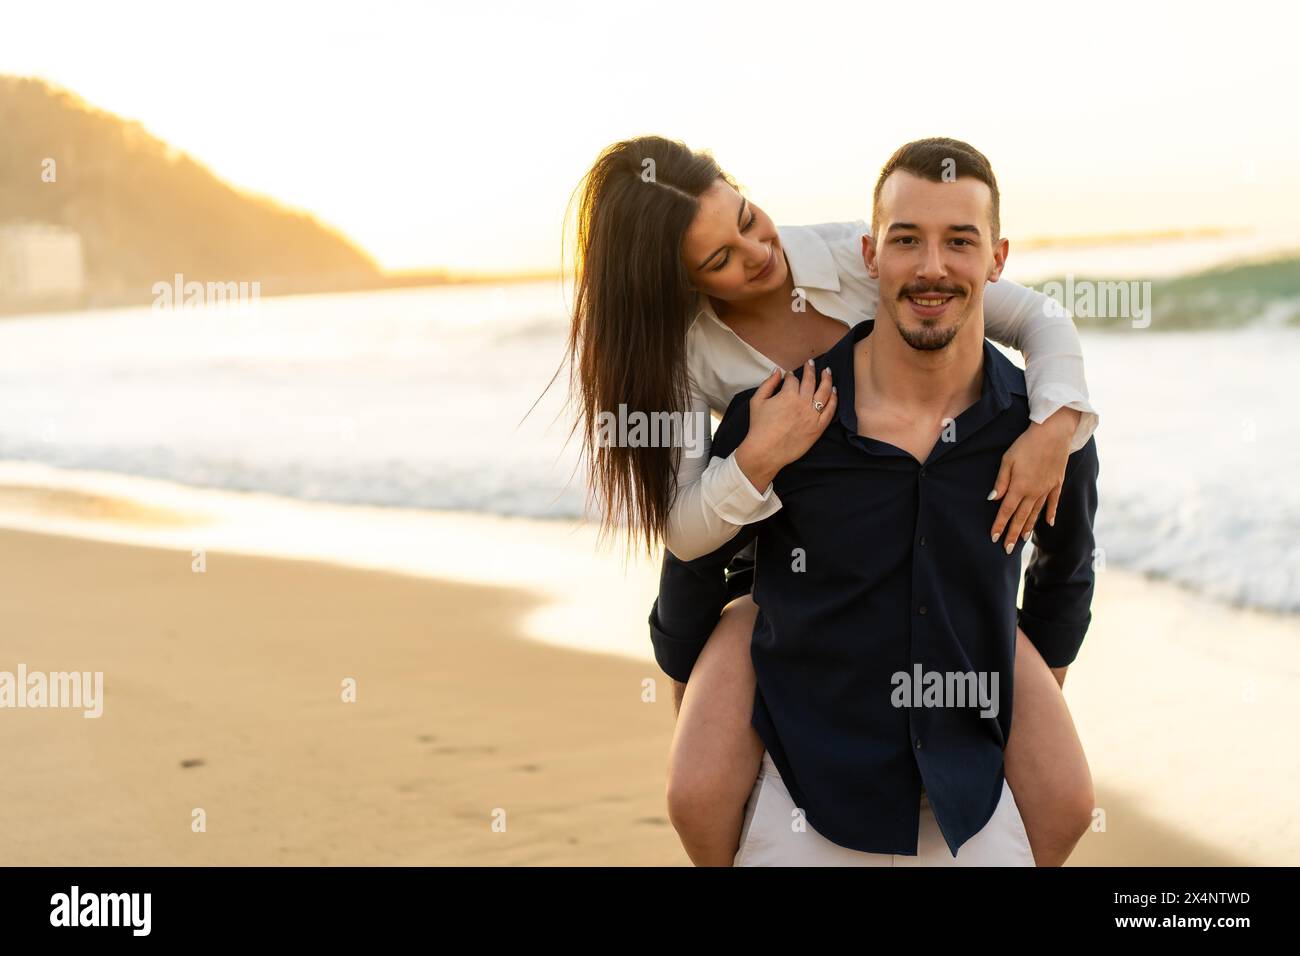 Woman piggybacking her boyfriend on the beach during sunset Stock Photo